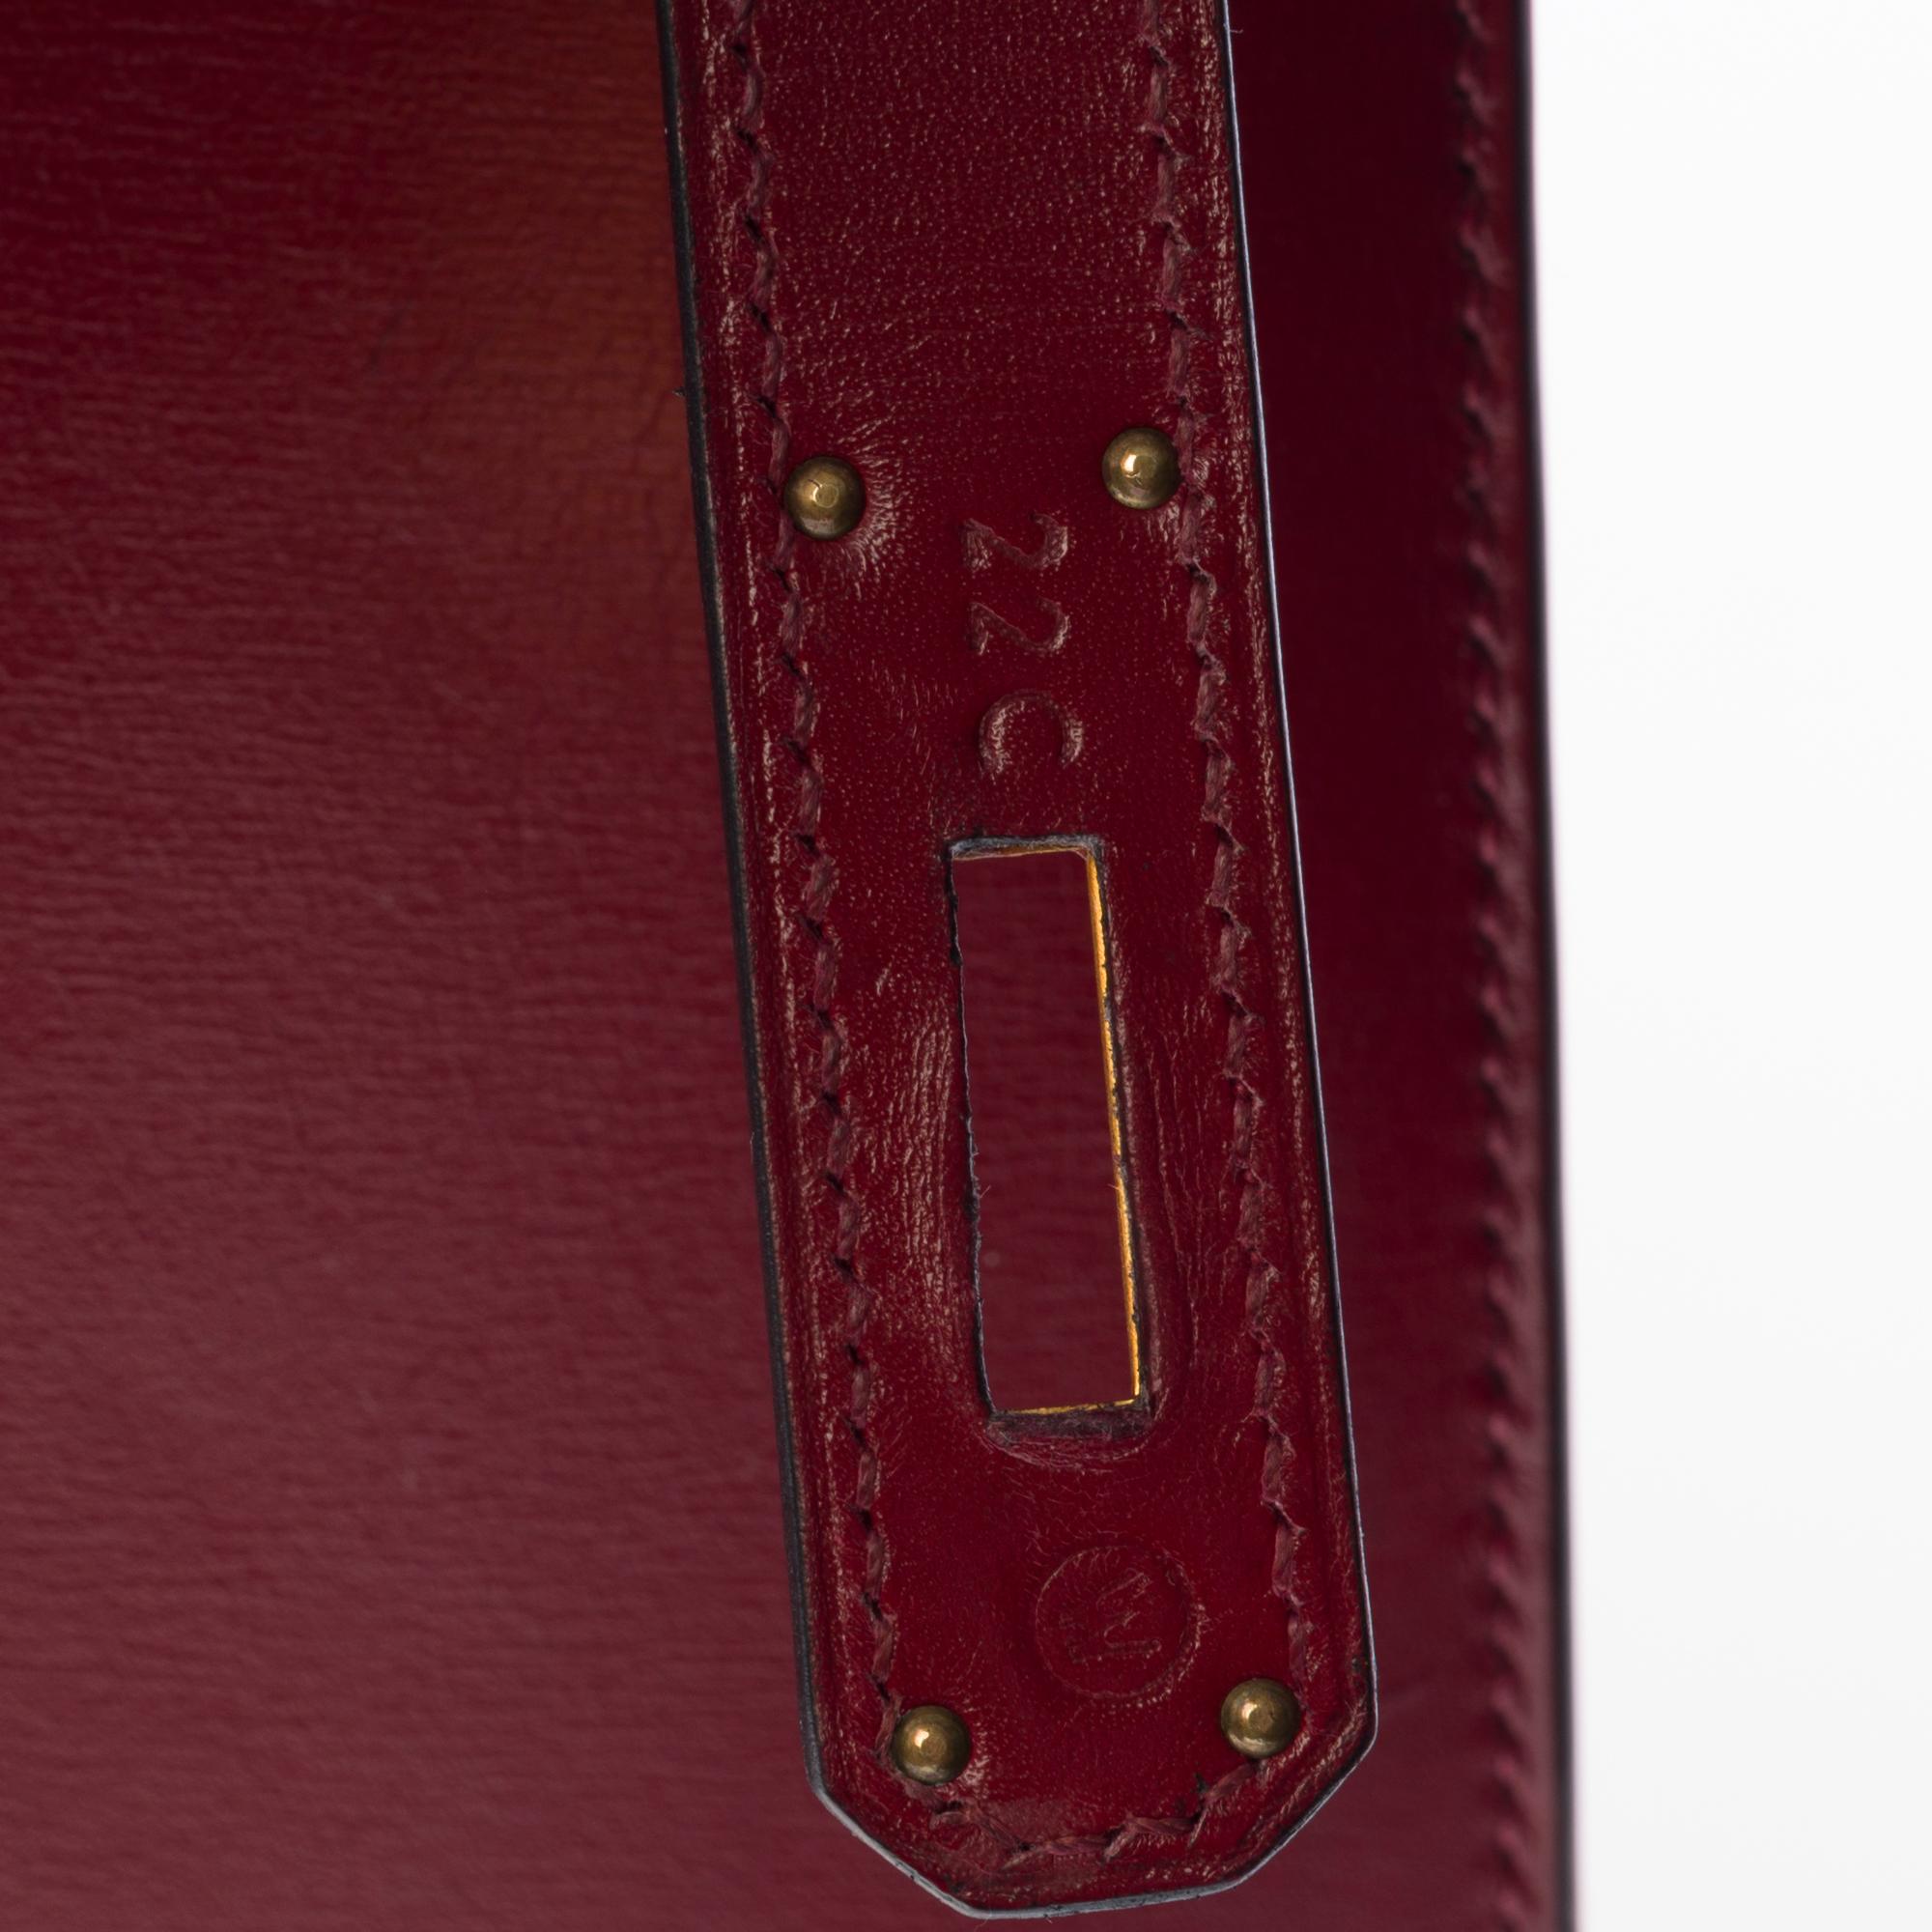 Hermès Kelly 35 sellier strap shoulder bag in burgundy calf leather, GHW 1